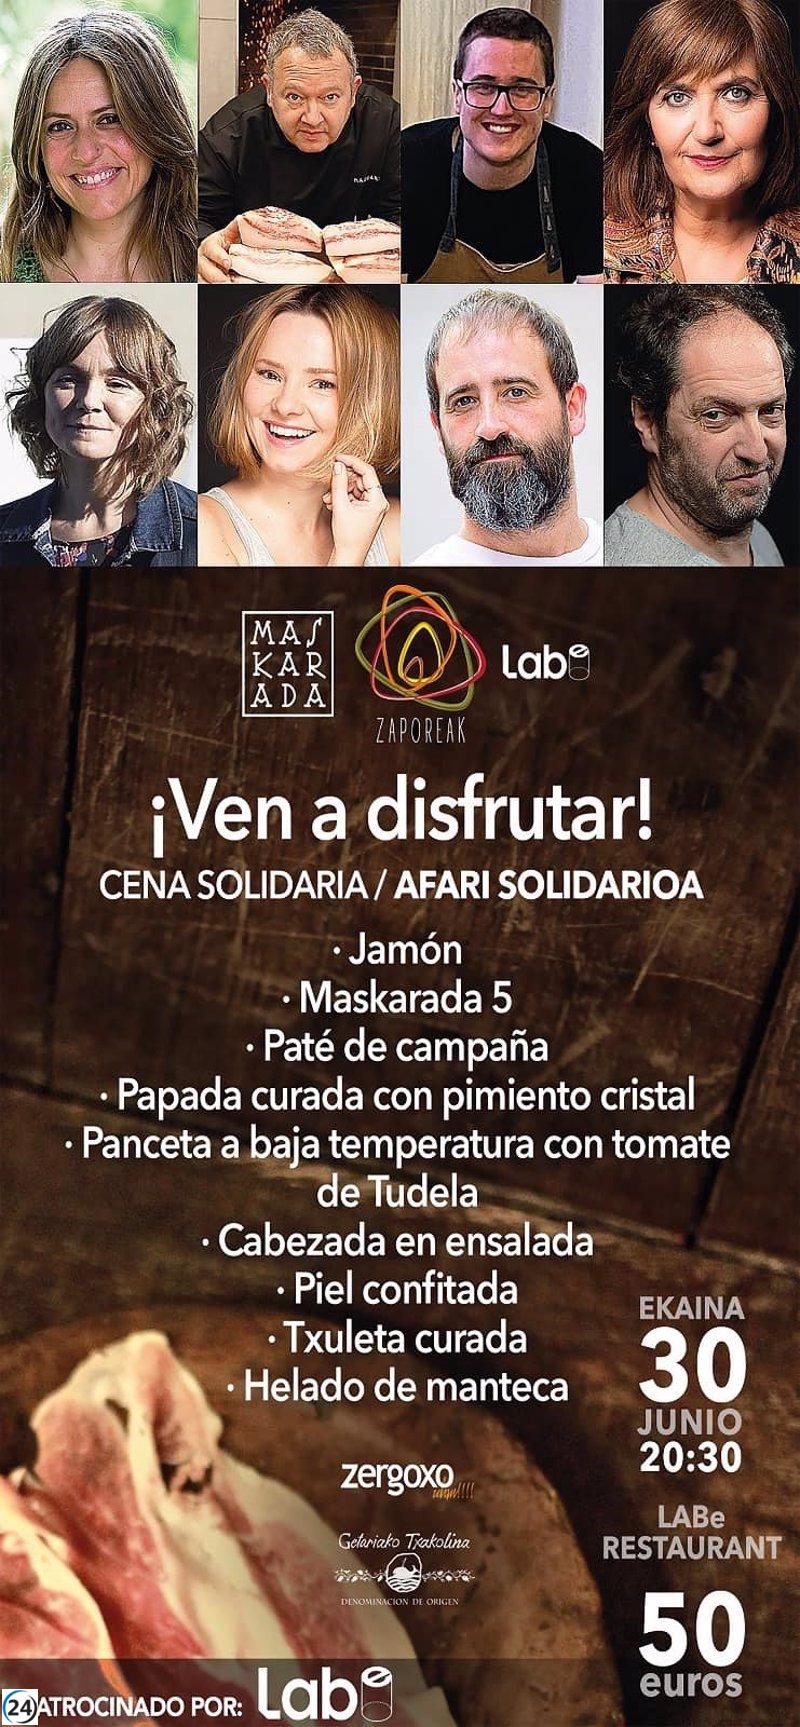 Actores vascos servirán cena solidaria en San Sebastián.